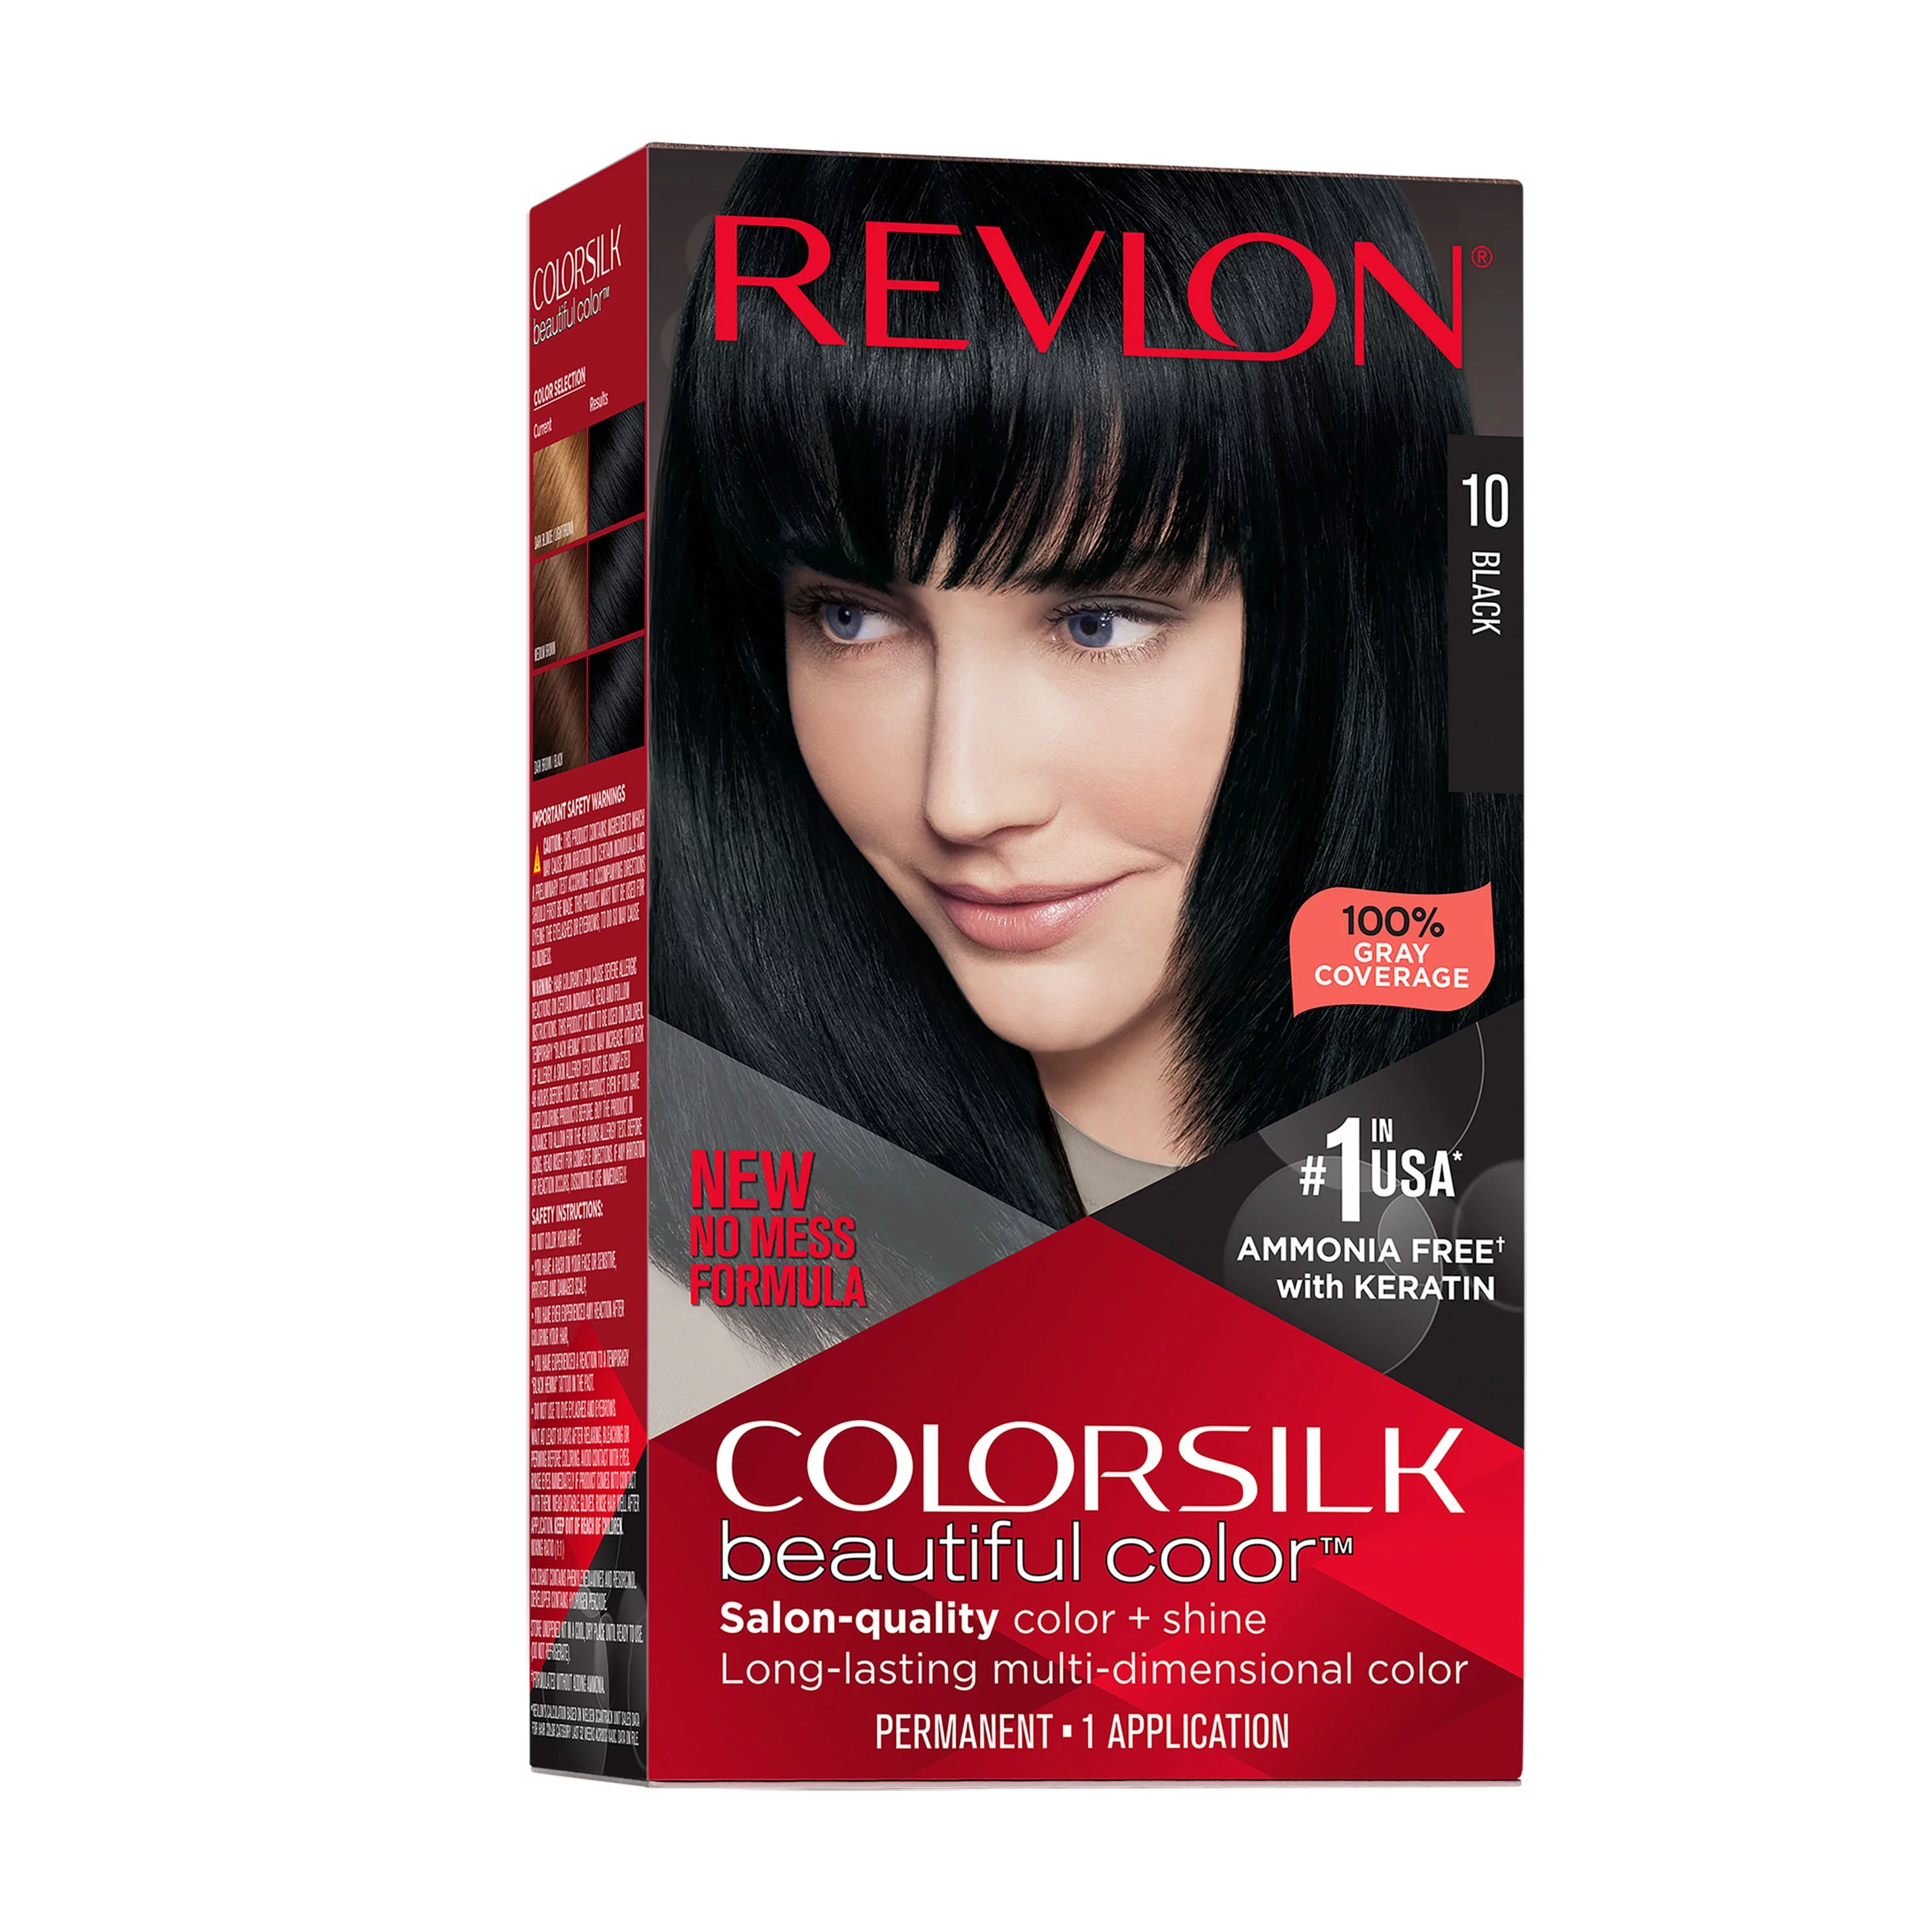 Revlon Colorsilk Beautiful Color Long Lasting Permanent Hair Color, 010 Black